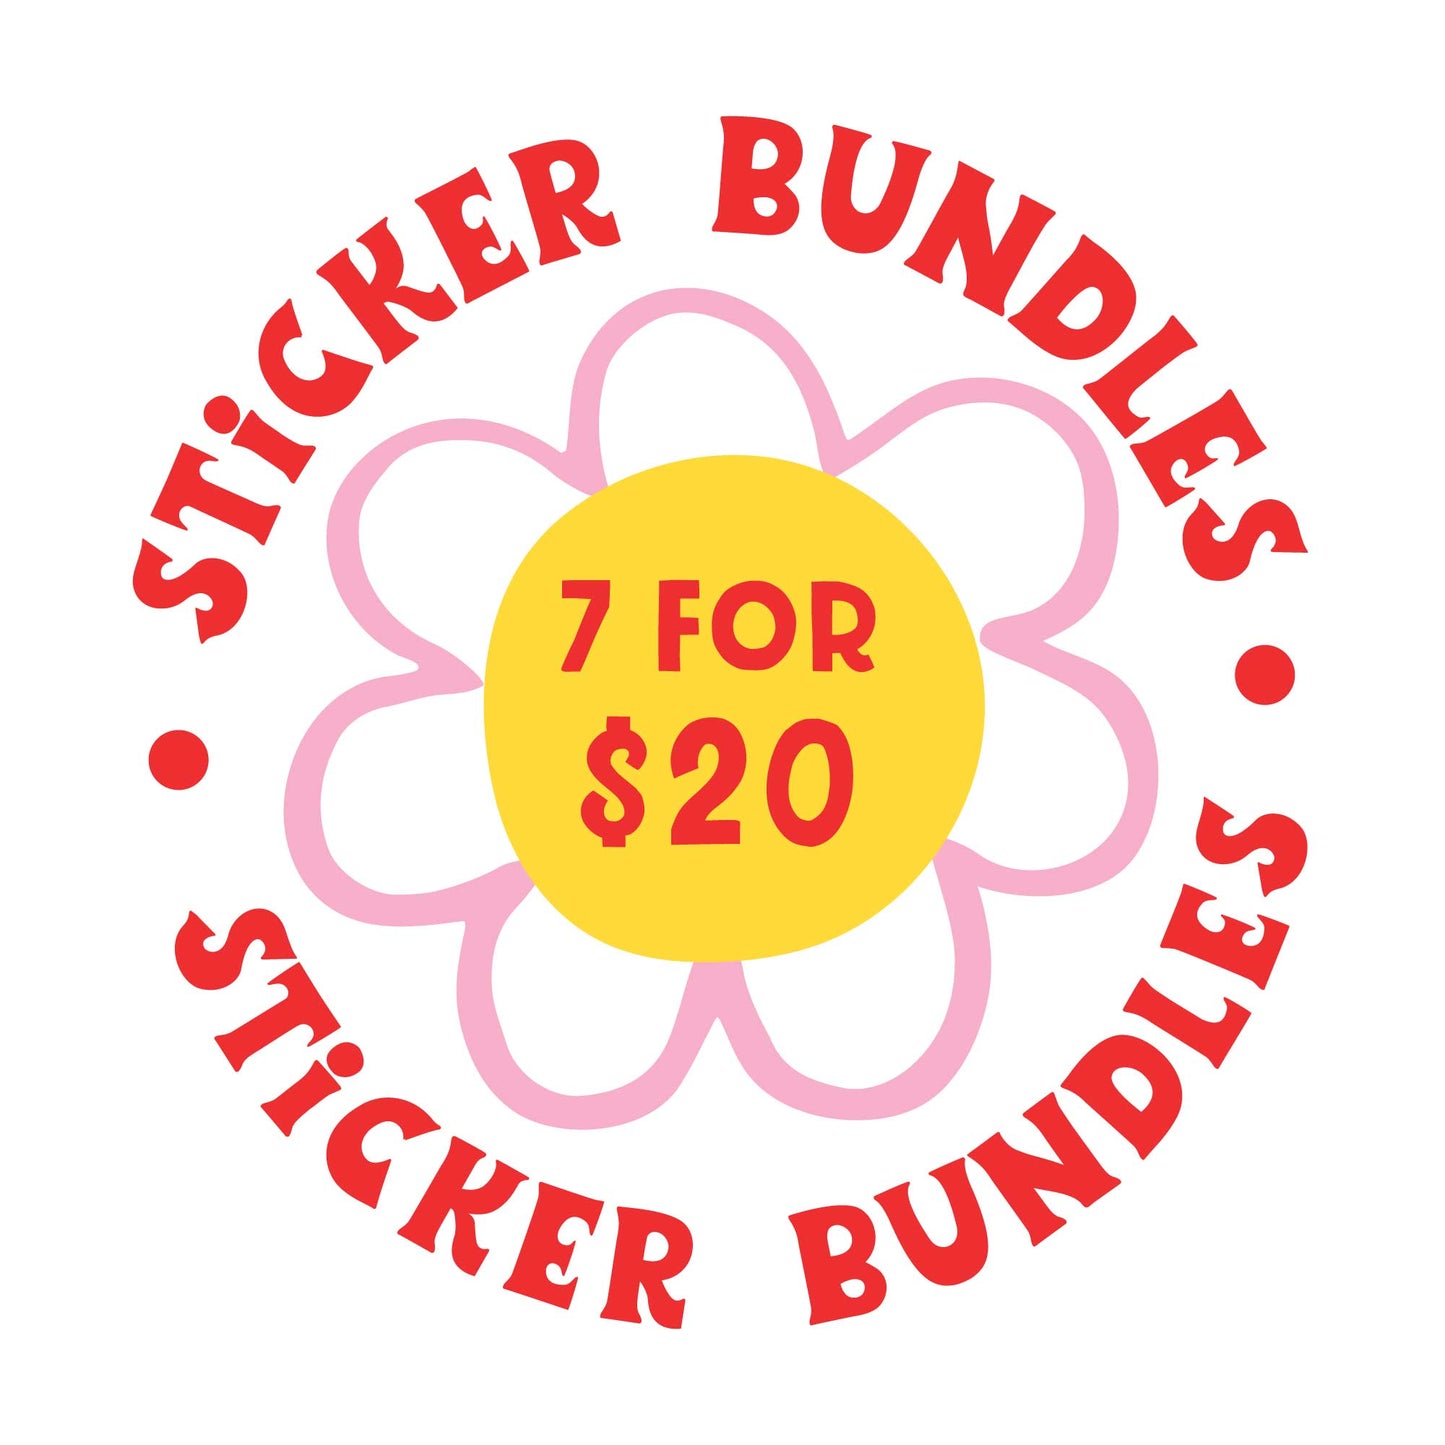 Sticker Bundles - Buy More, Save More